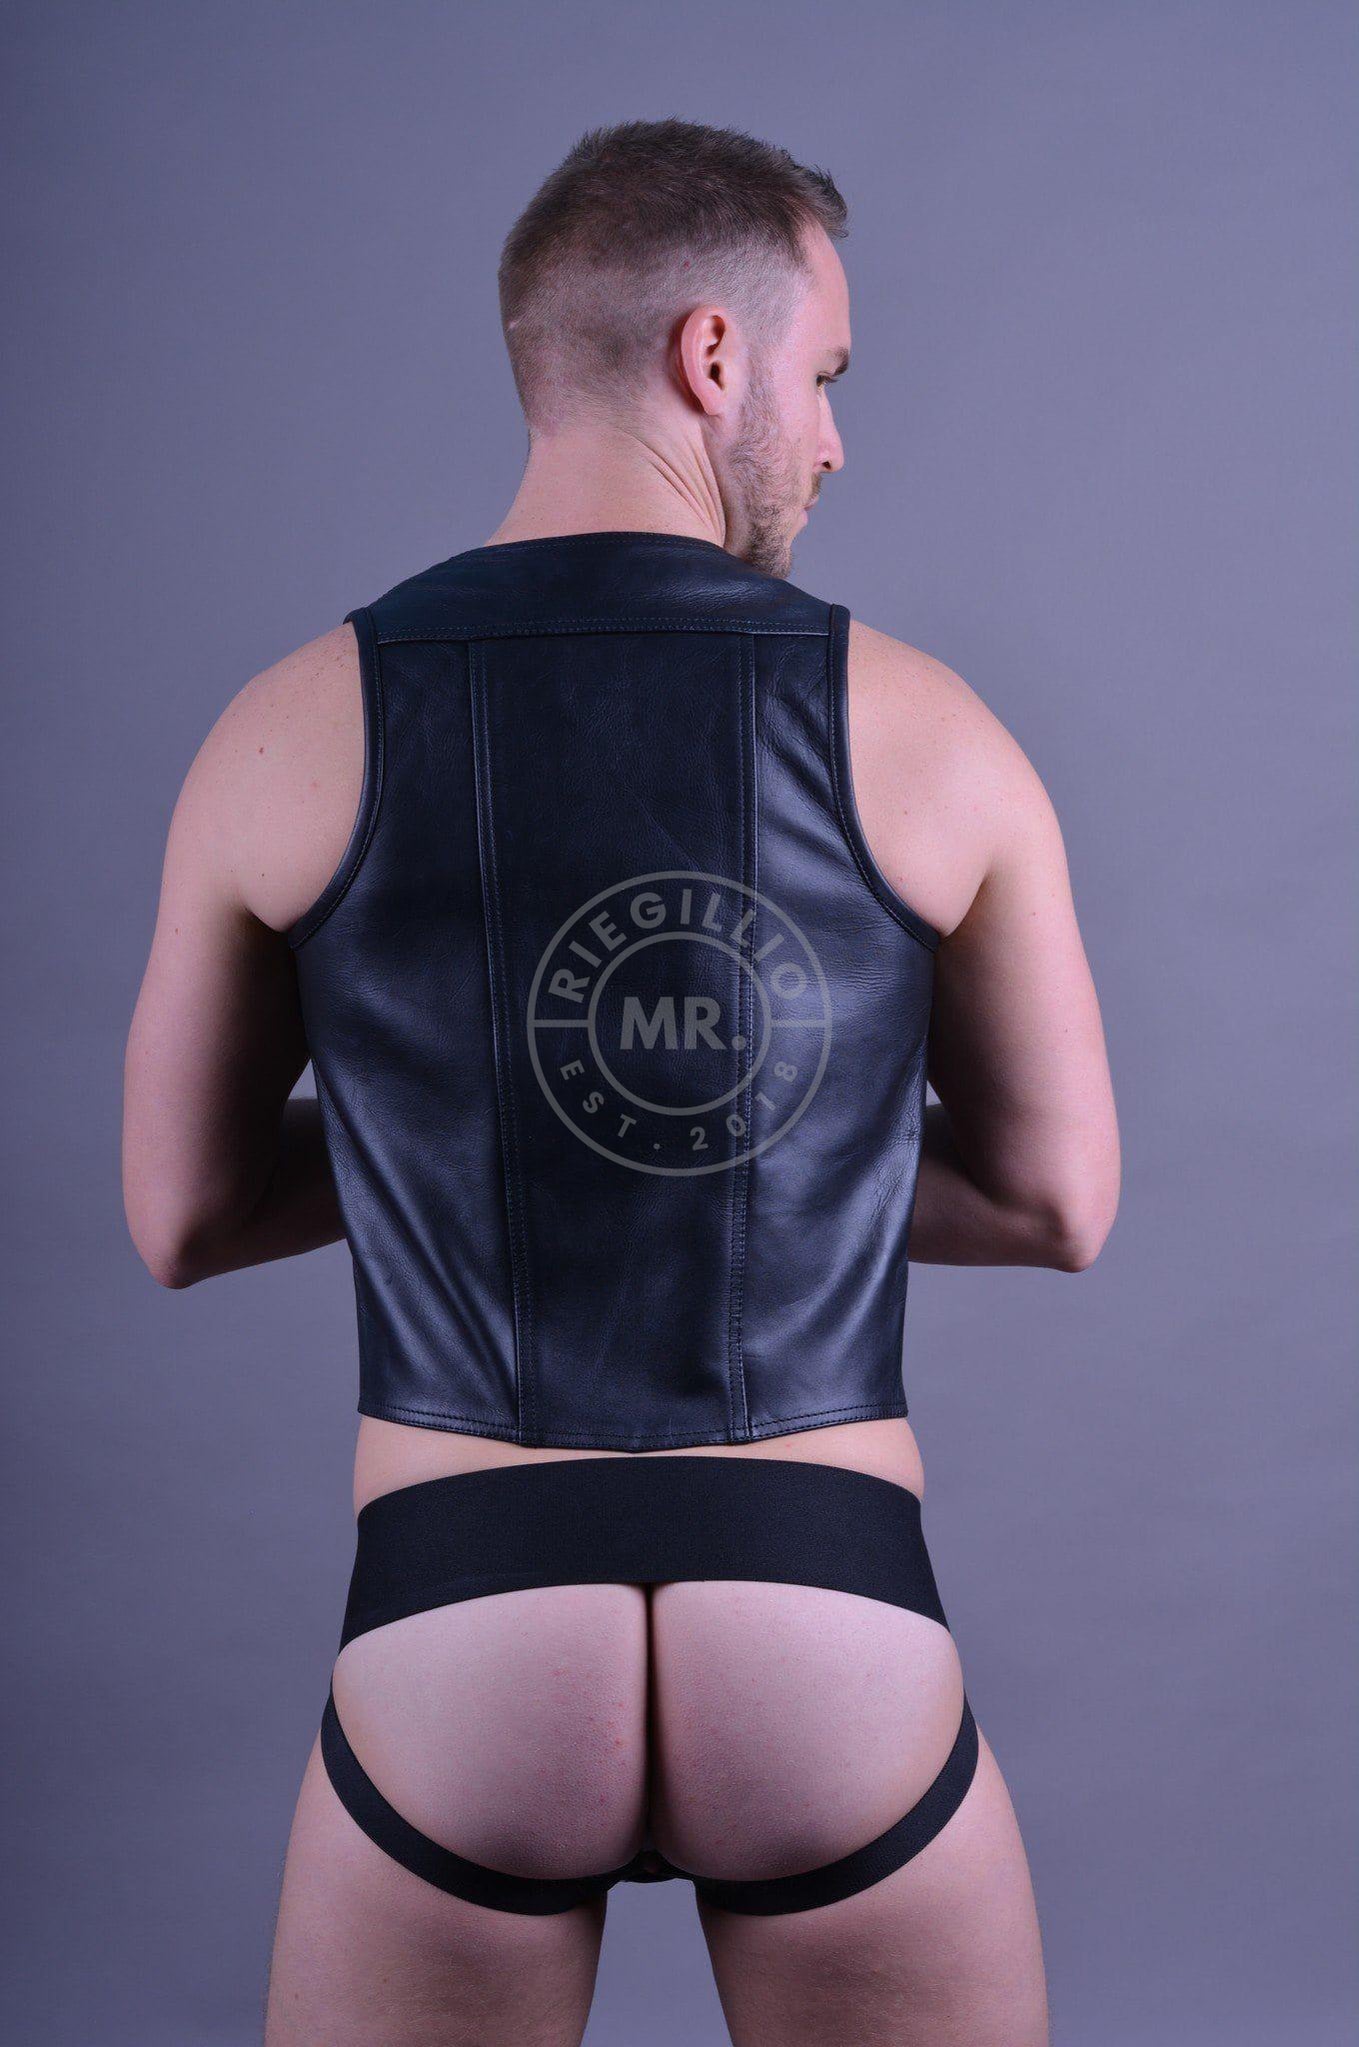 Mister B Leather Premium Jockstrap - Black at MR. Riegillio